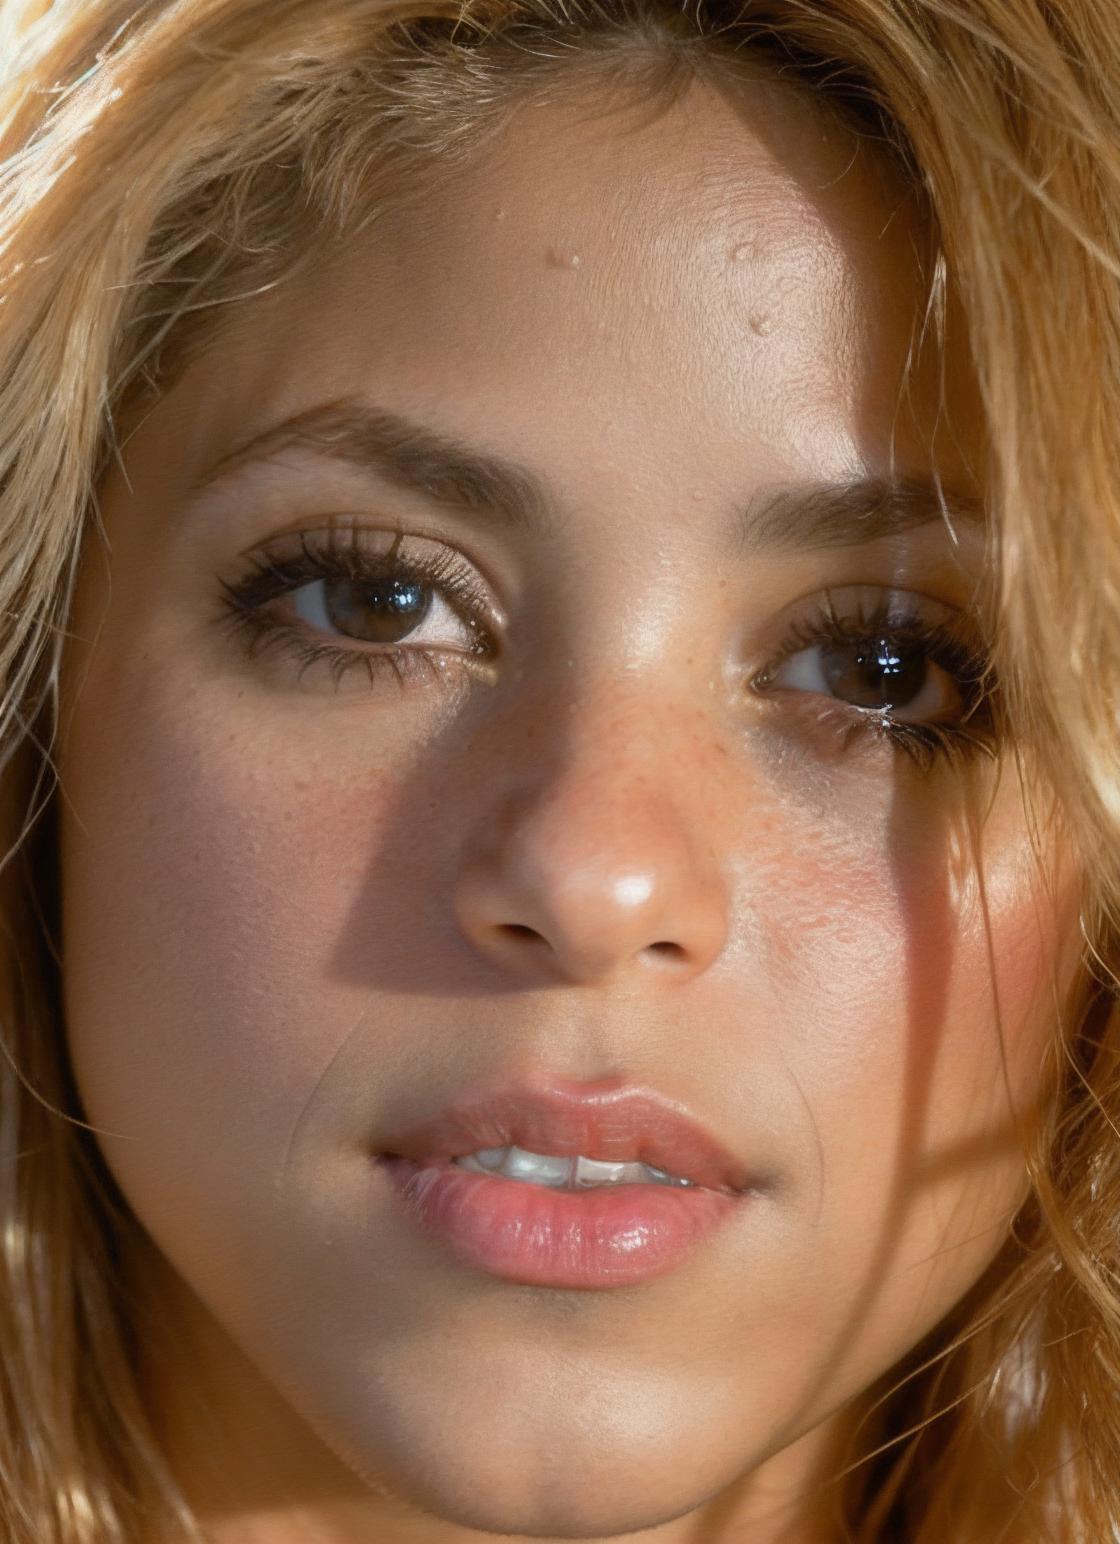 Shakira Mebarak image by astragartist